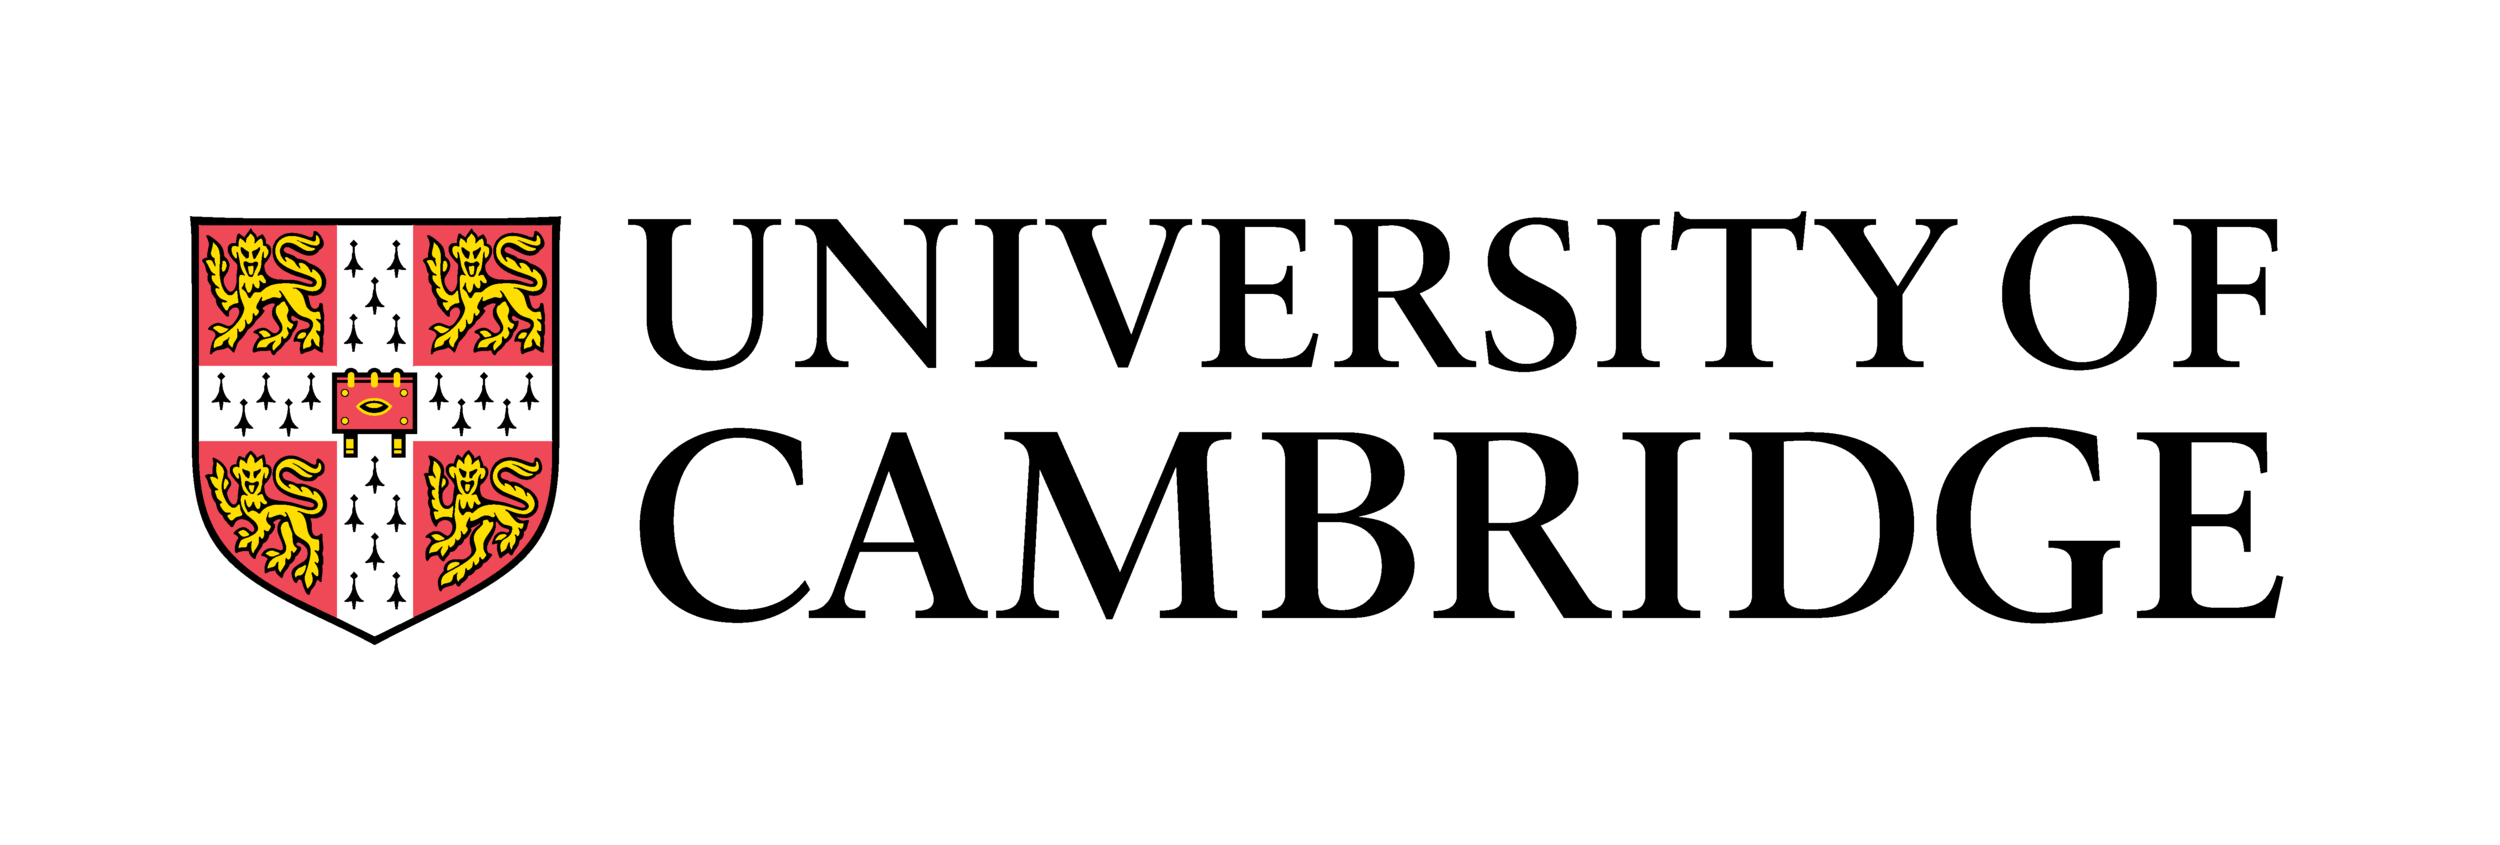 university-of-cambridge-logo.png